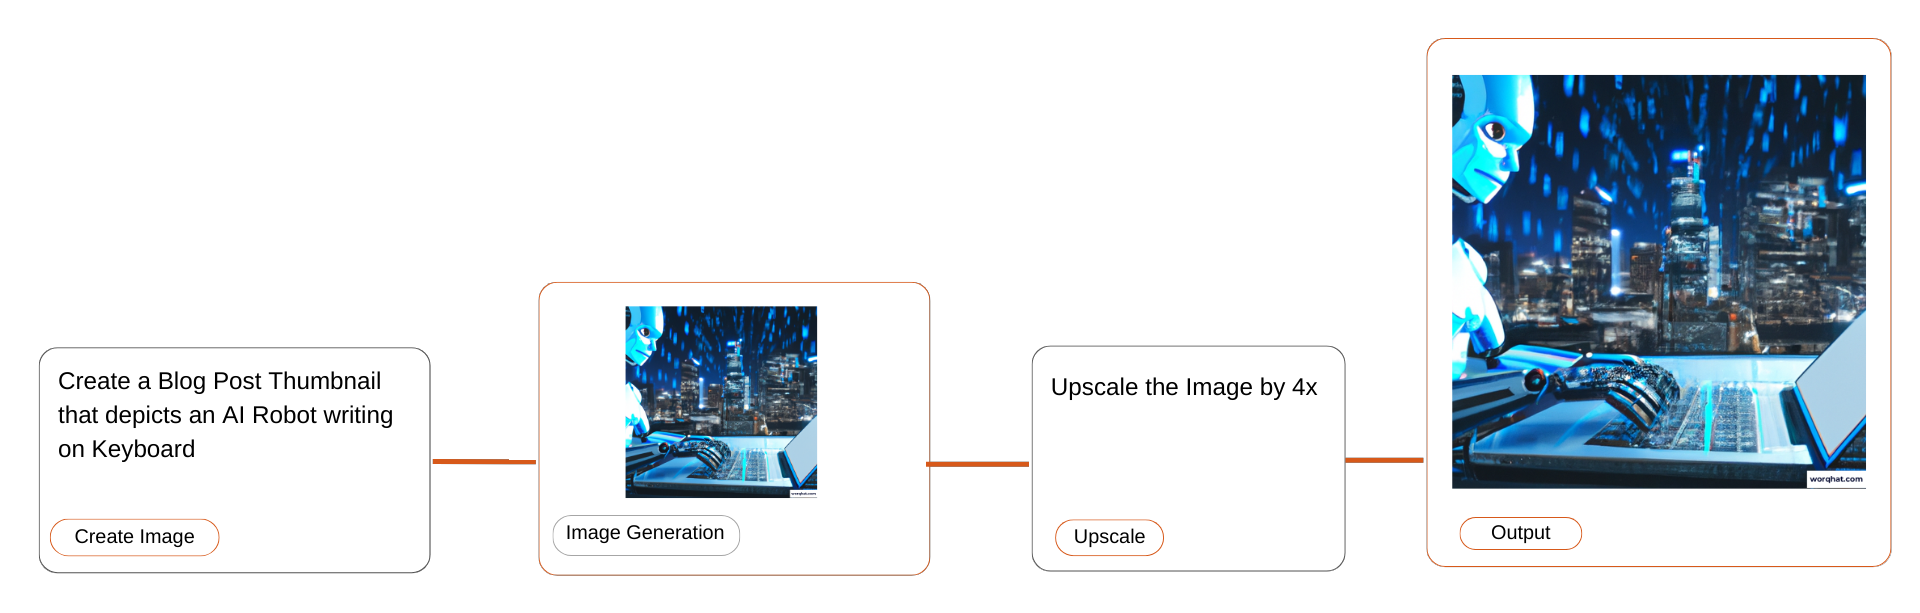 Image Processing Workflow